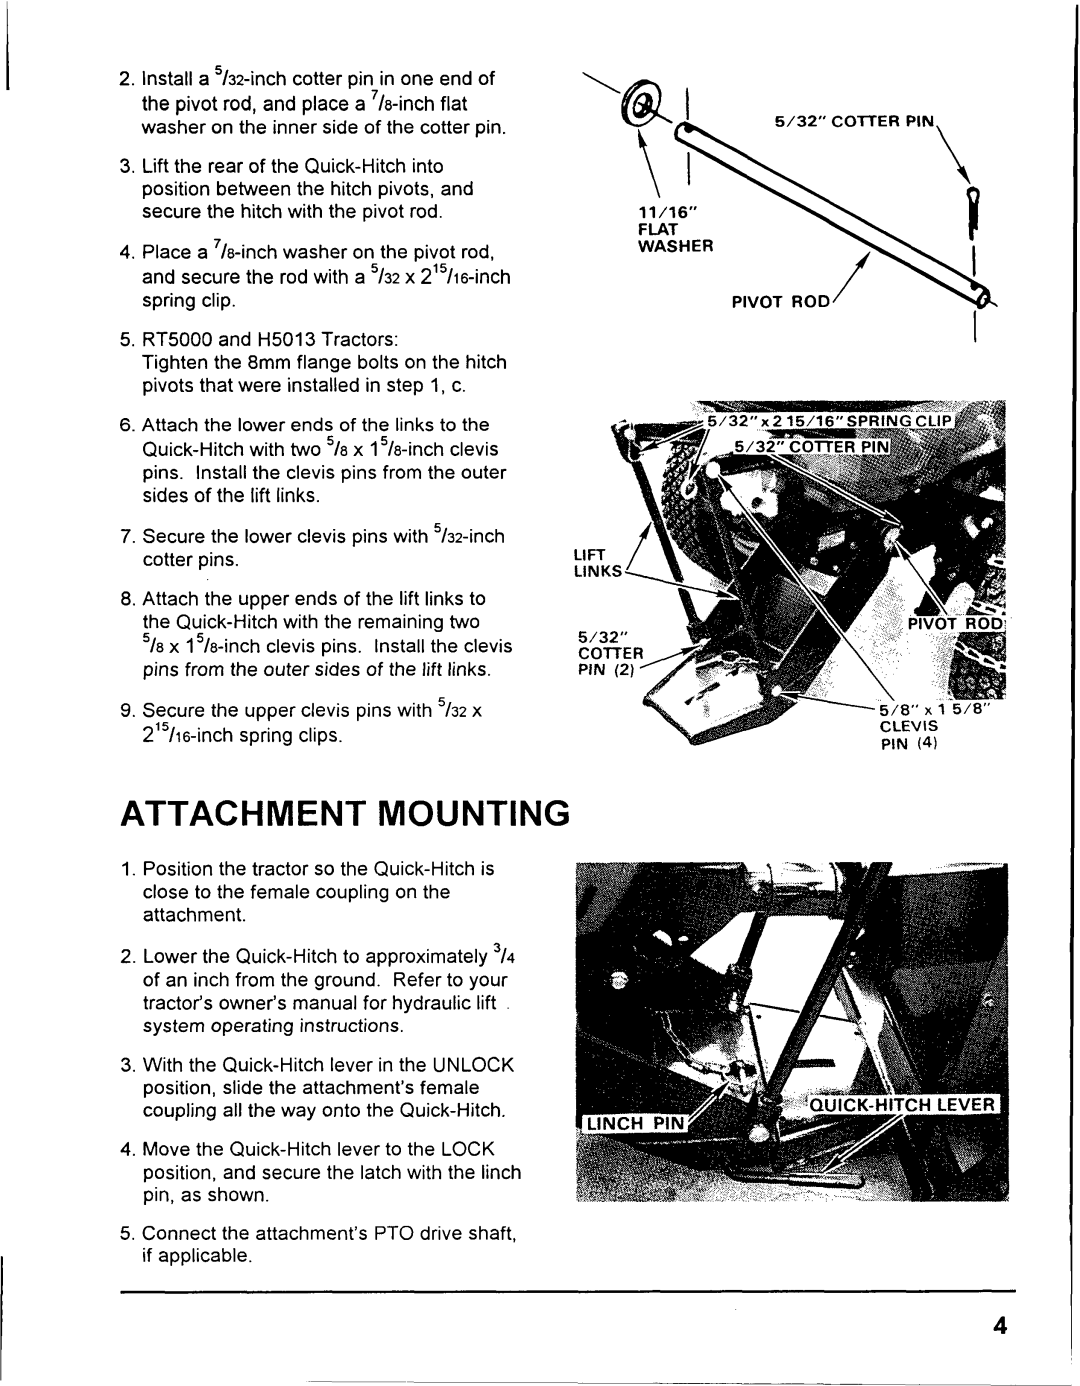 Honda Power Equipment QH5000 manual Attachment Mounting 